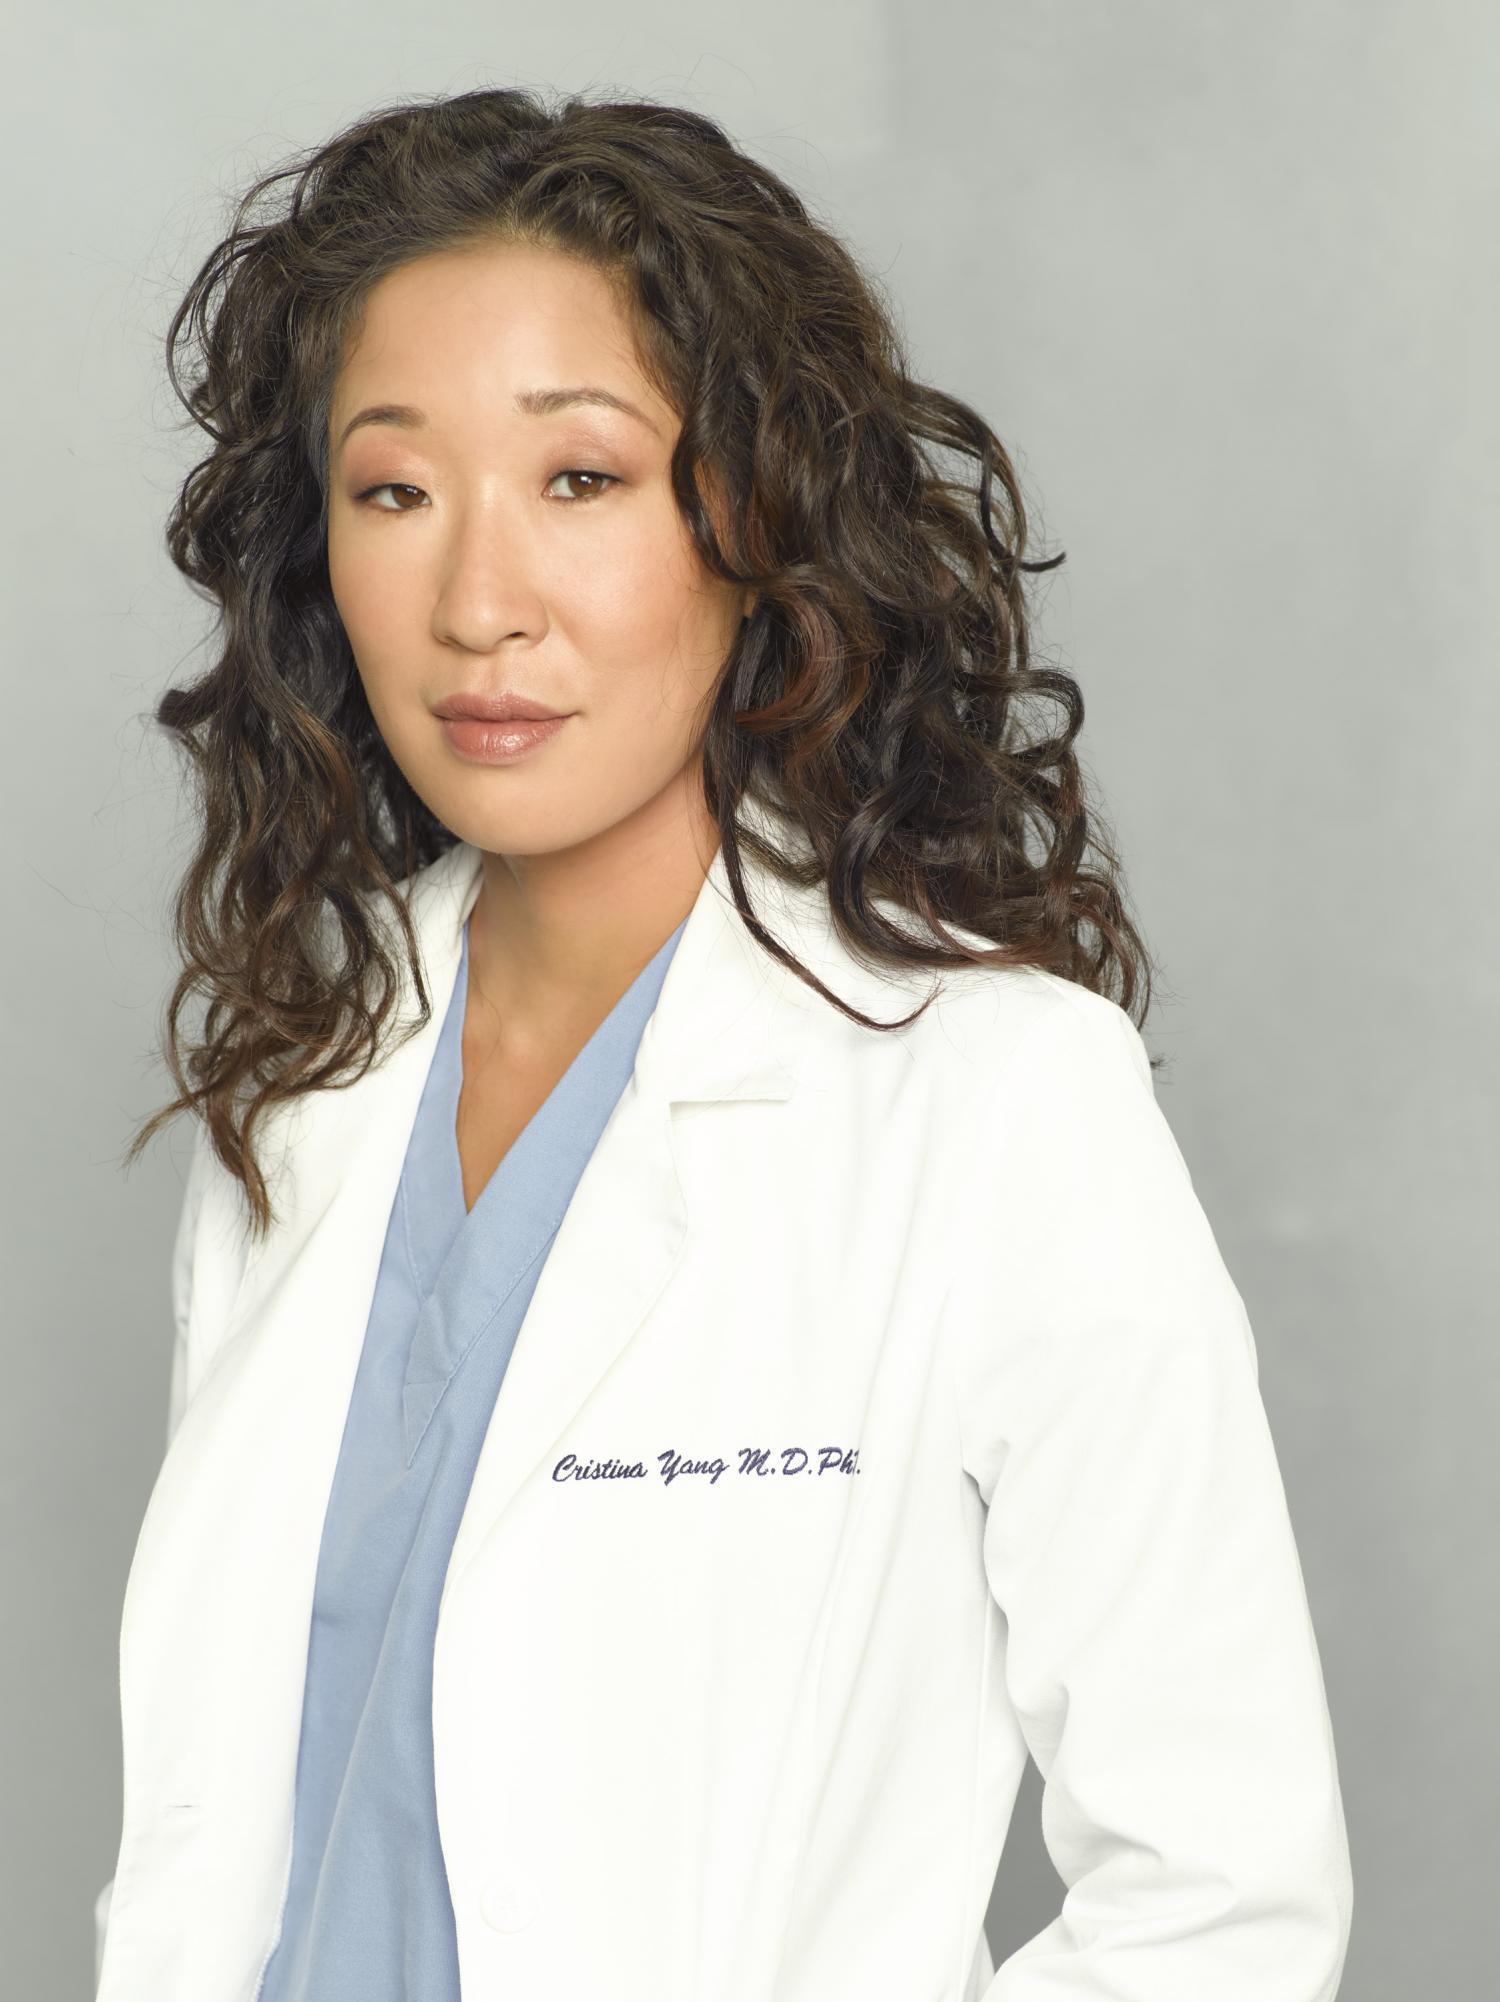 The Hottest Photos Of Sandra Oh From Greys Anatomy - 12thBlog